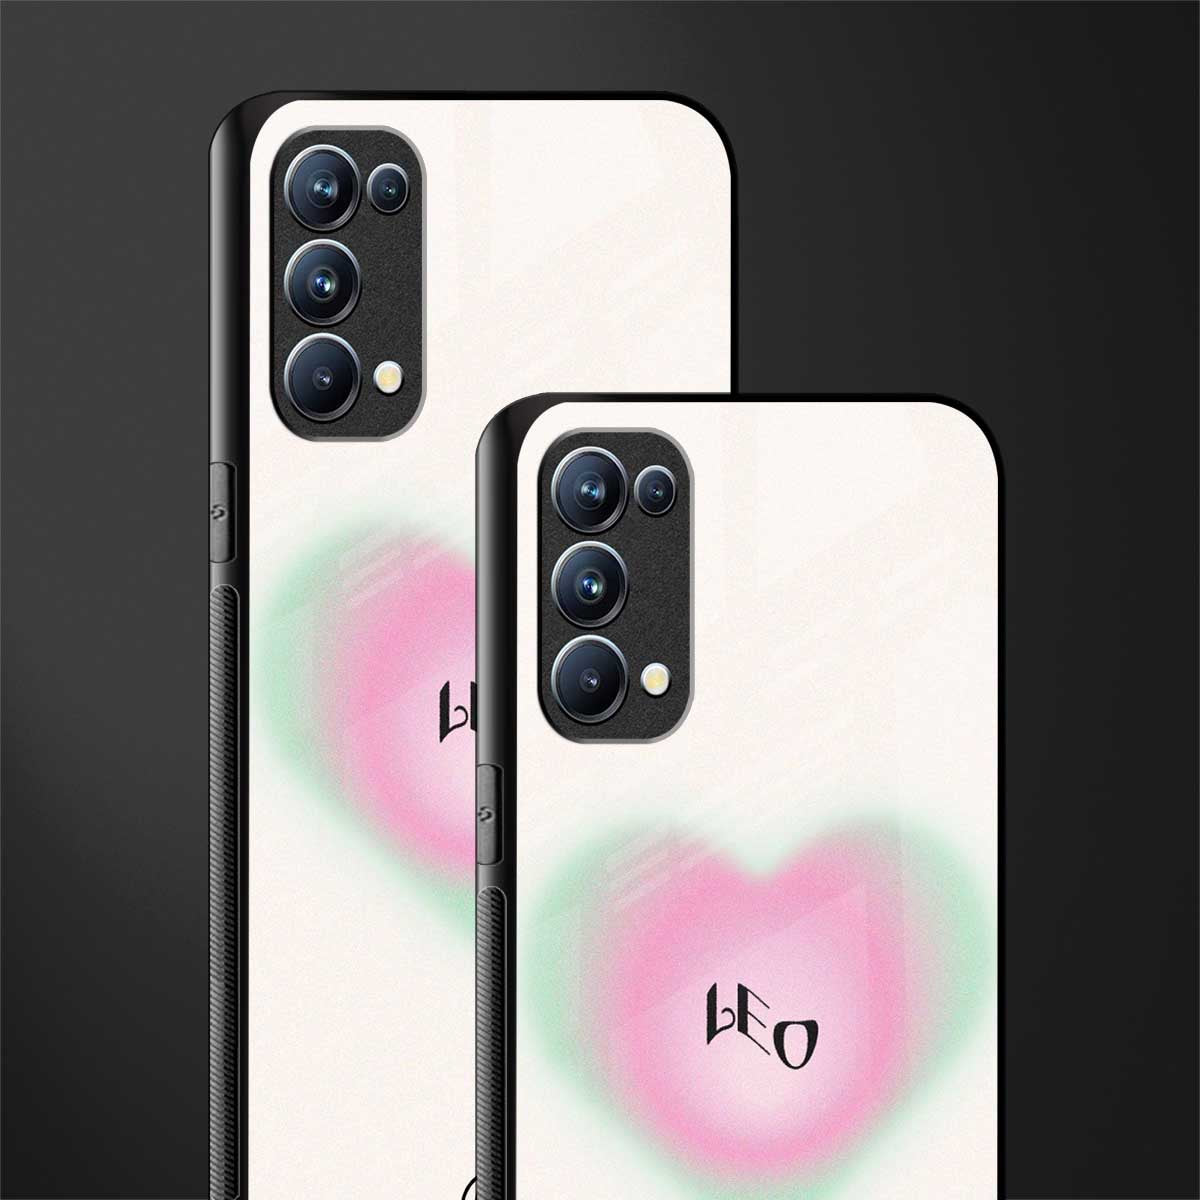 leo minimalistic back phone cover | glass case for oppo reno 5